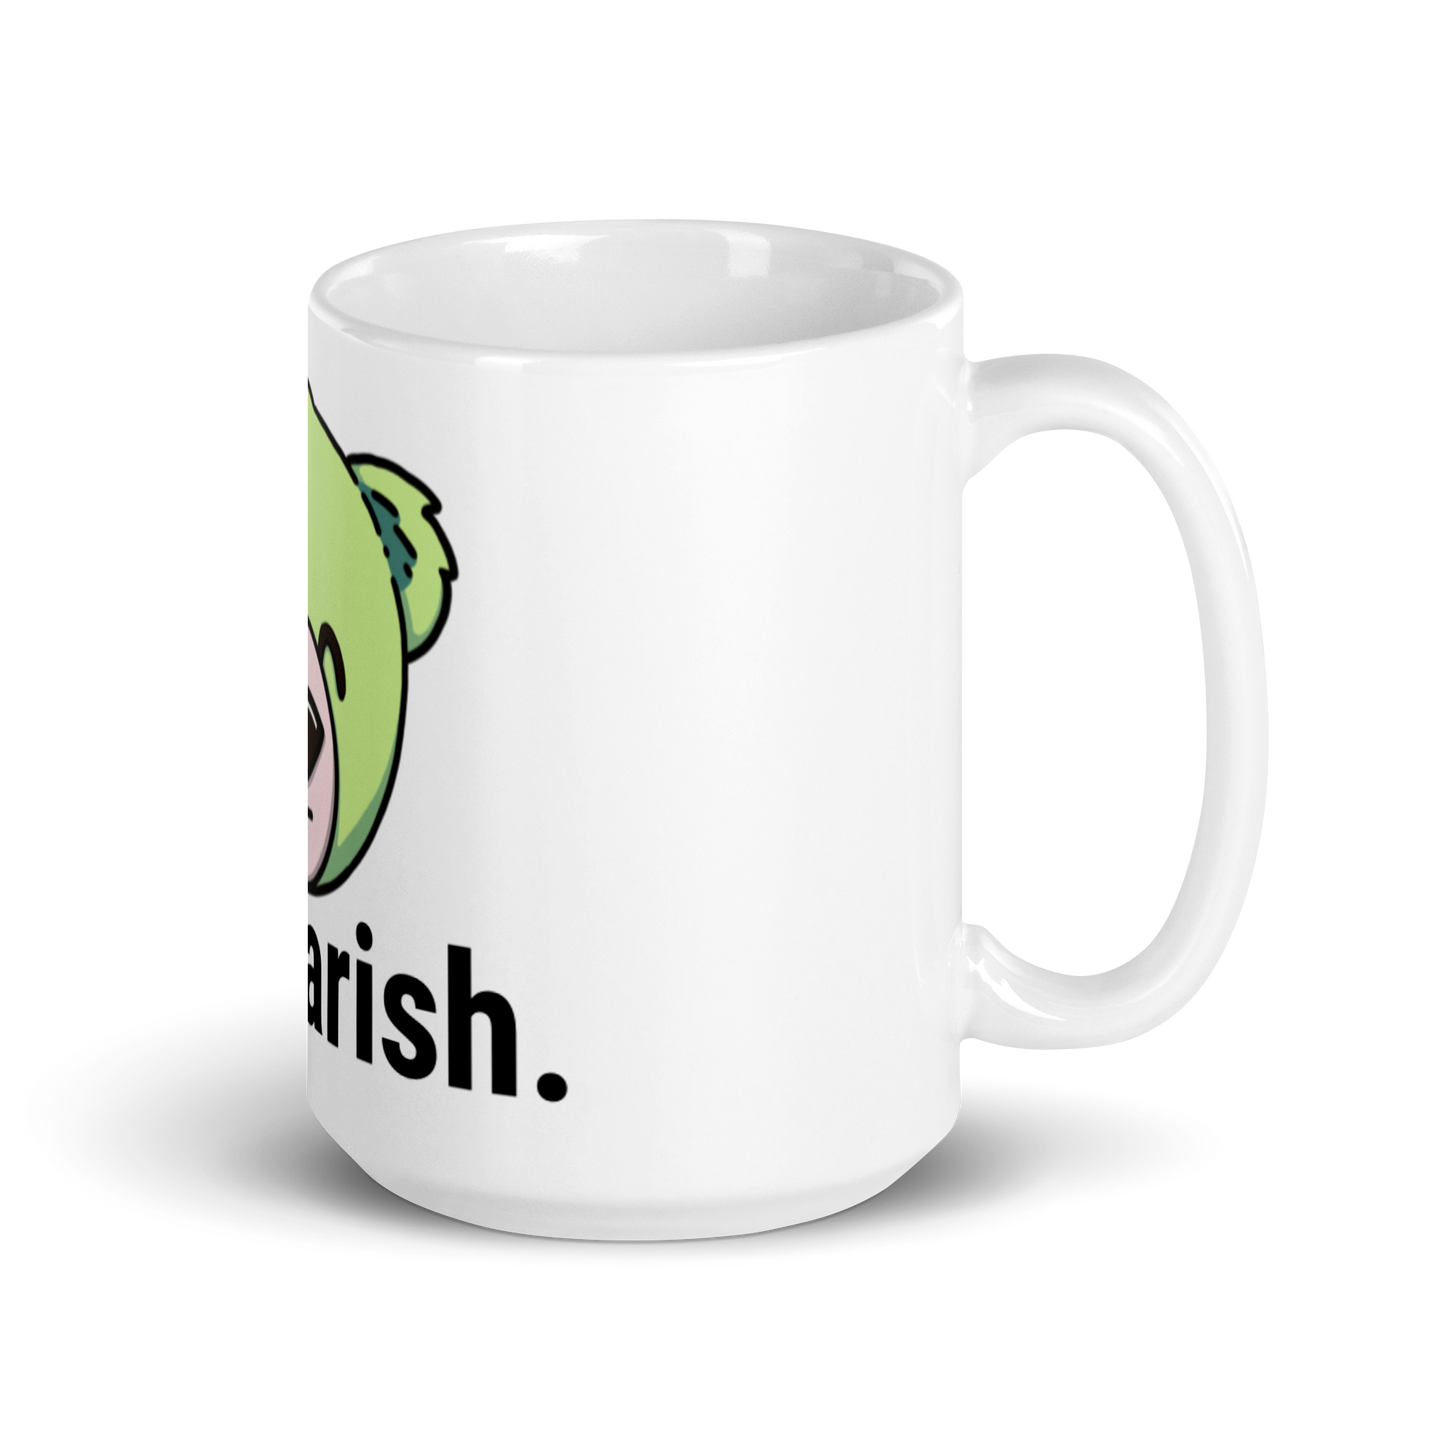 WeBearish Logo Coffee Mug (White/Green)